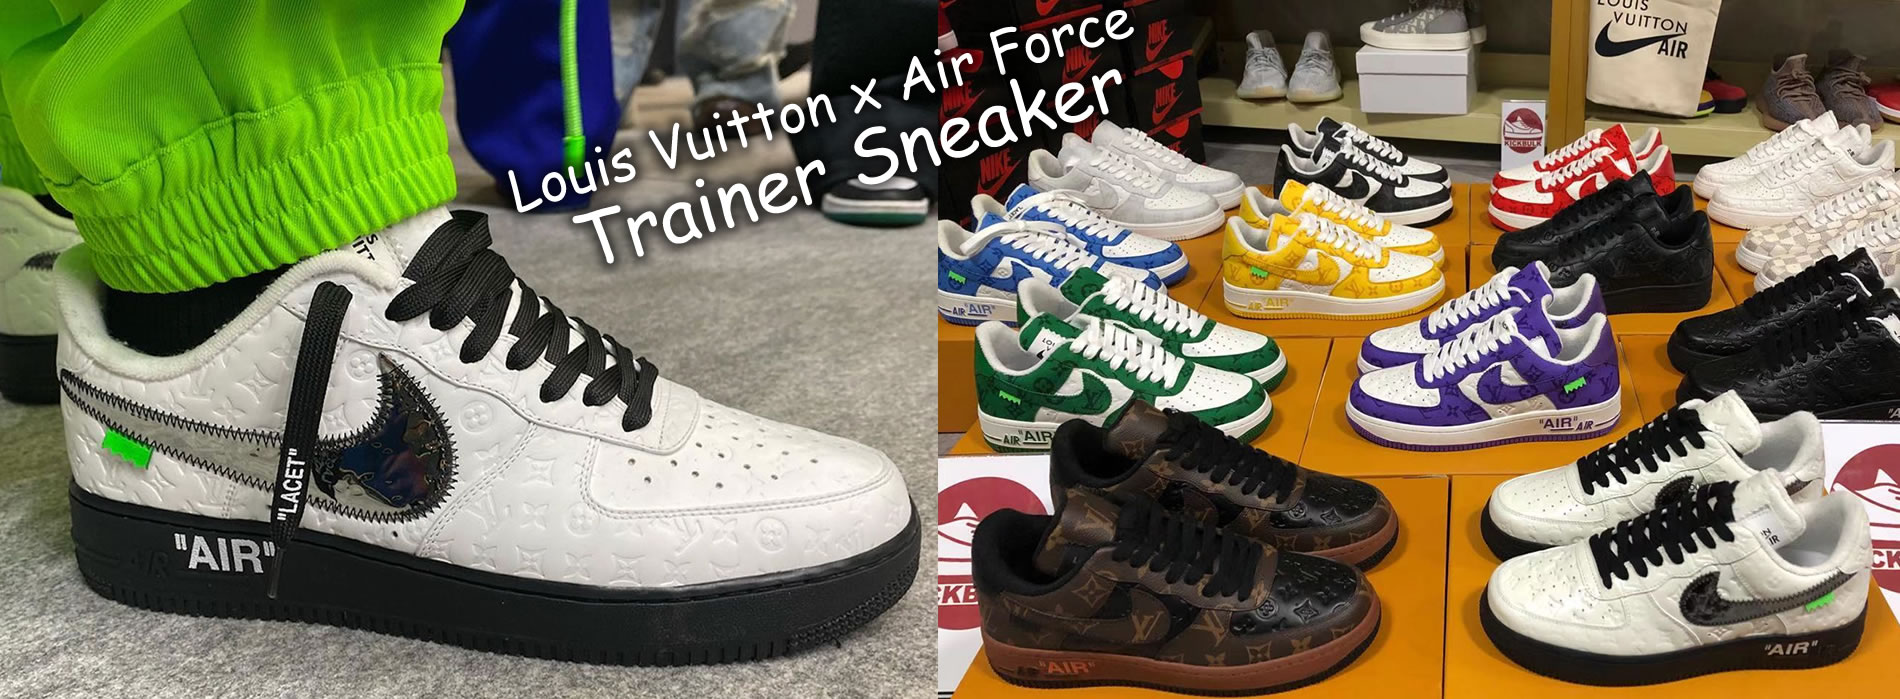 Louis Vuitton x Air Force 1 Trainer how Sneaker